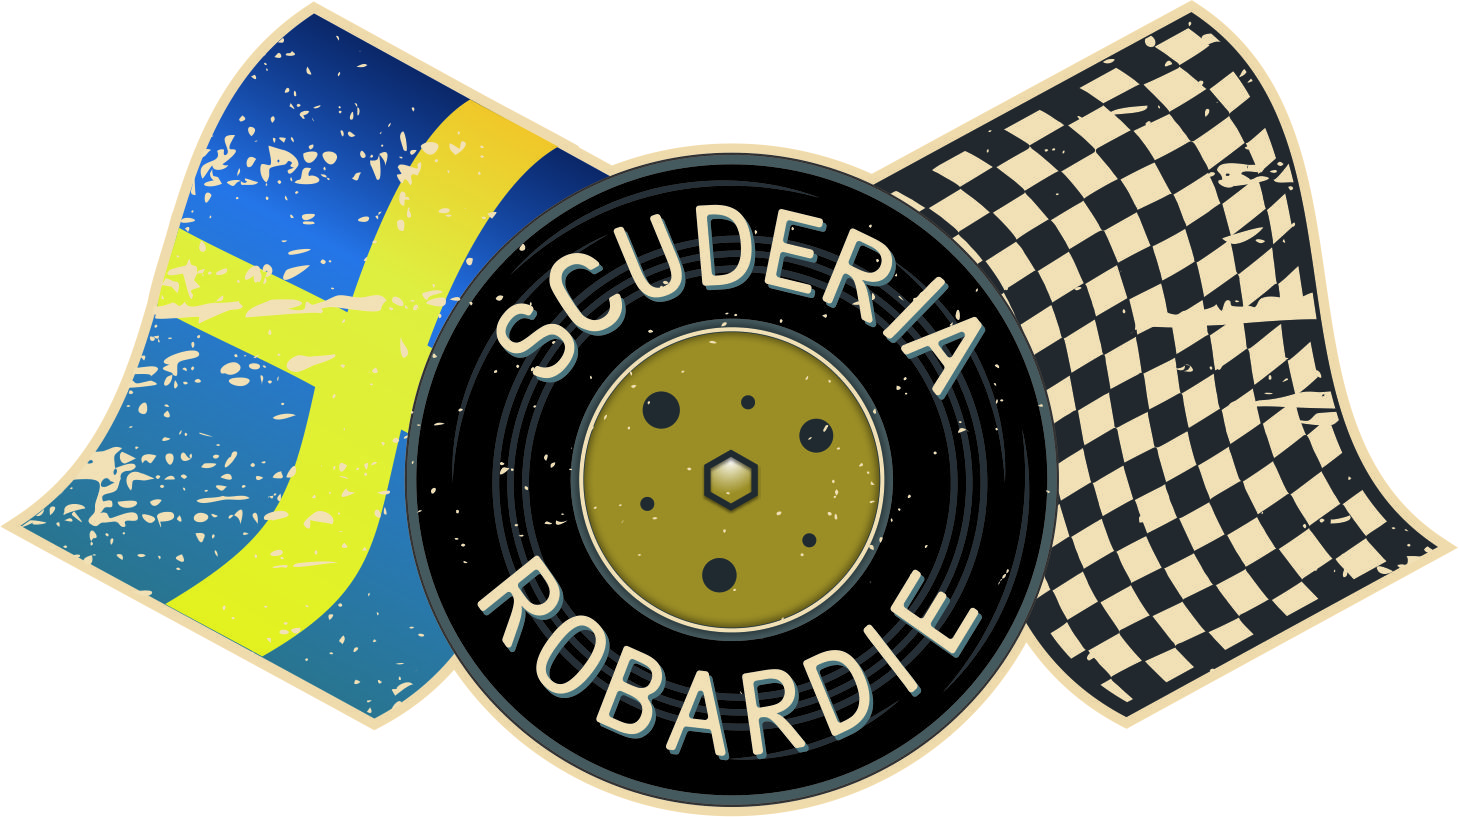 Ronnies signum - Scuderia Robardie dekal och foto enligt originalmärket, format 12x7cm